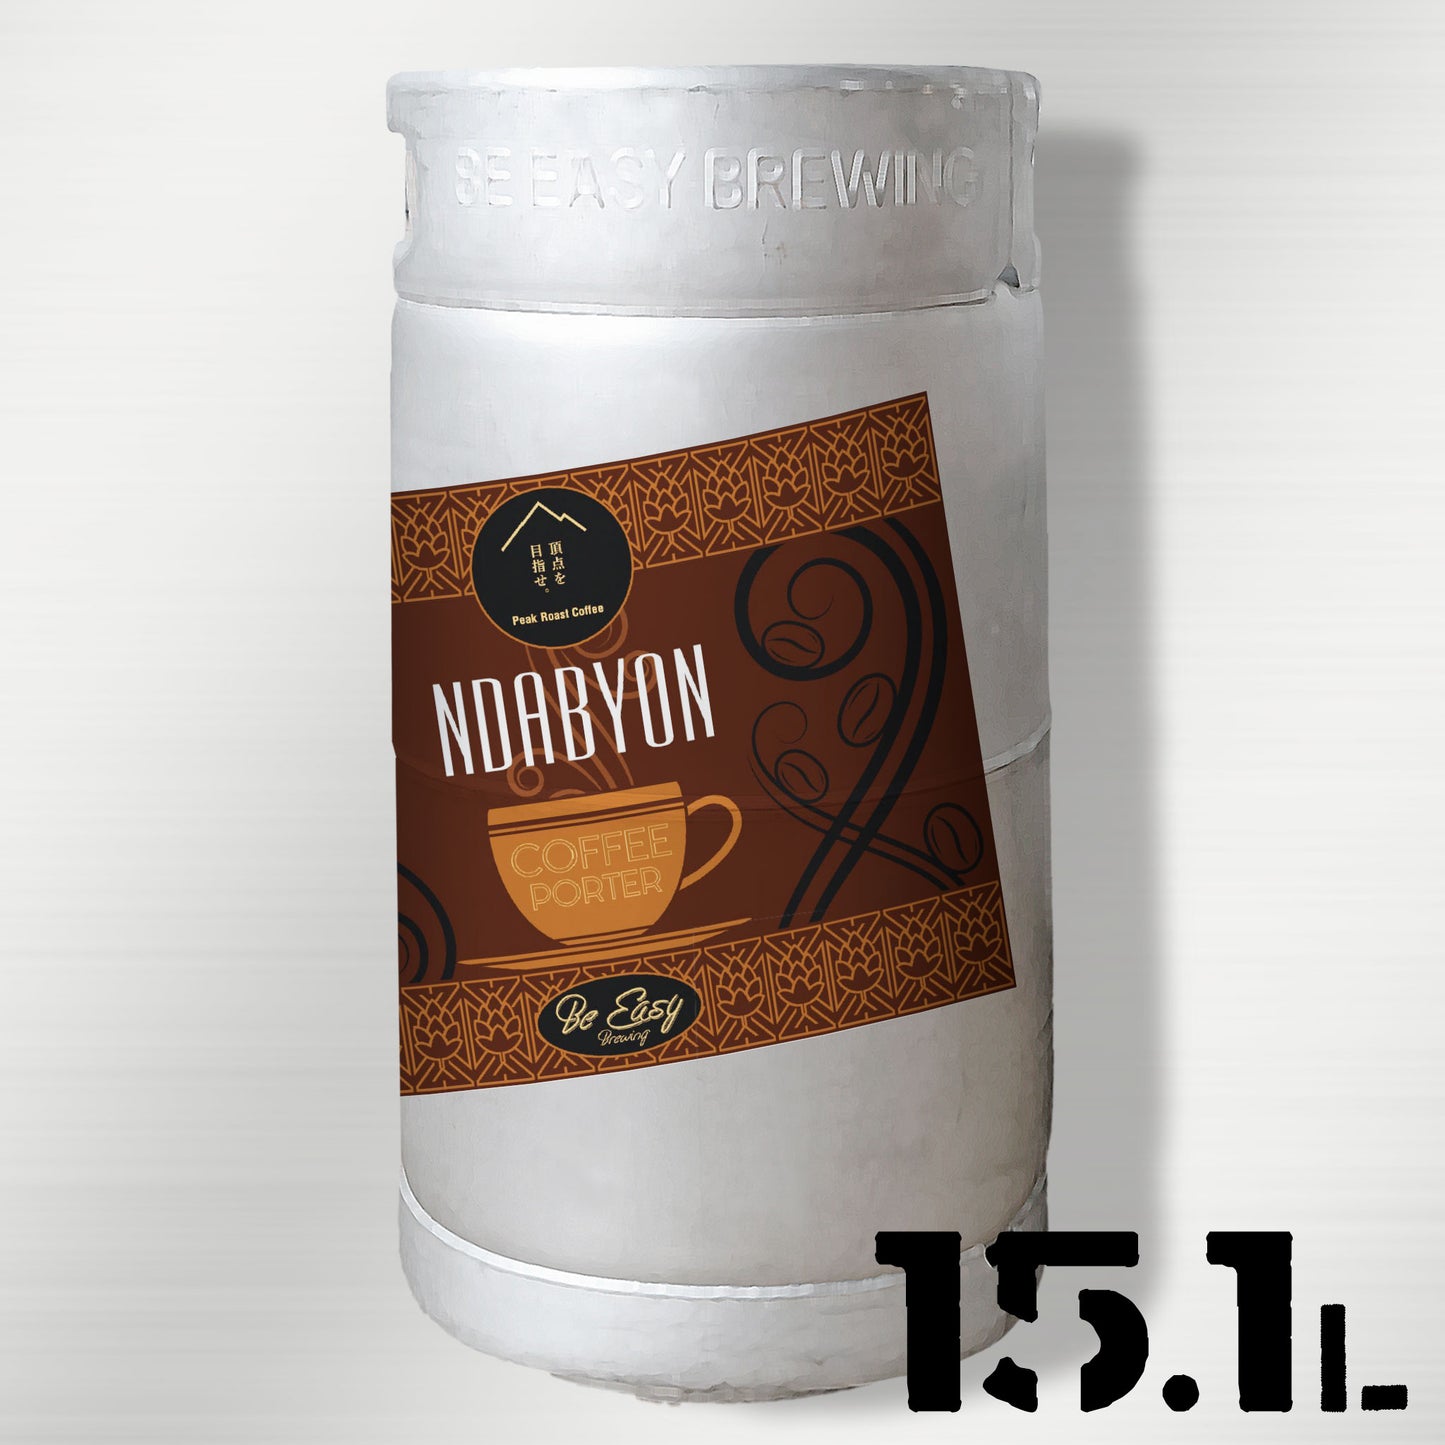 Ndabyon　－　Coffee Porter